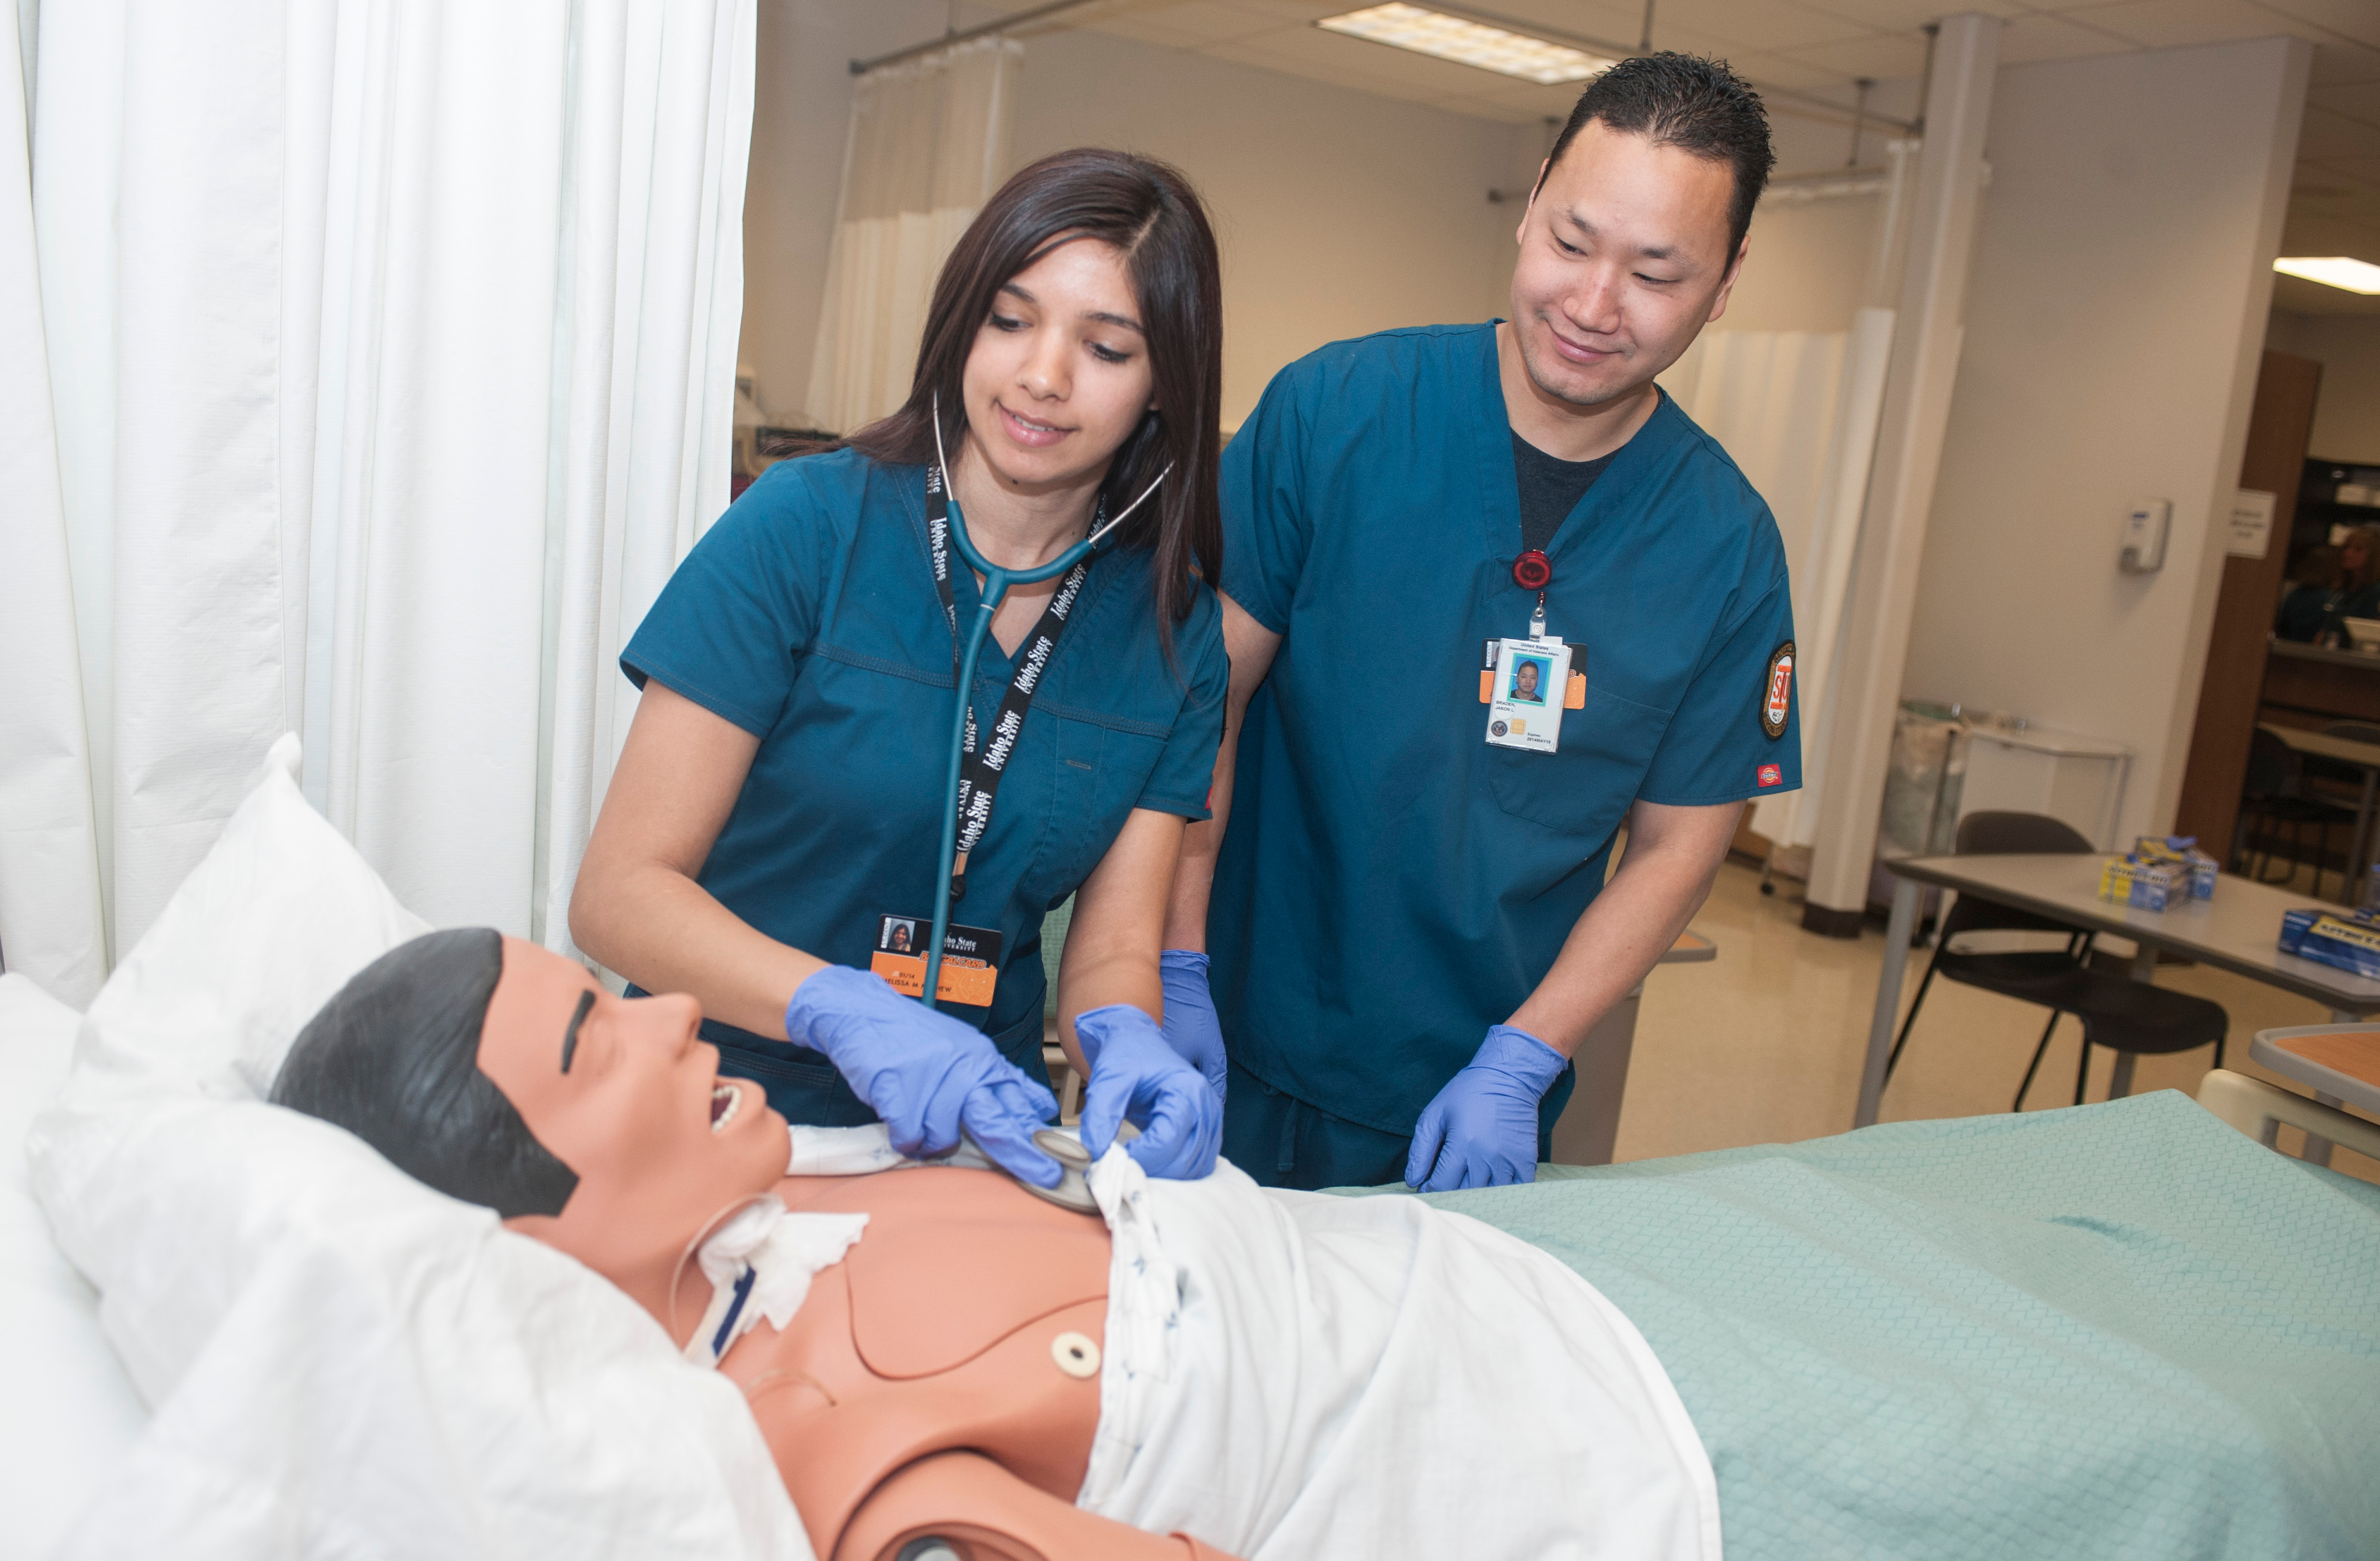 Nursing students train using a simulation manikin at ISU-Meridian